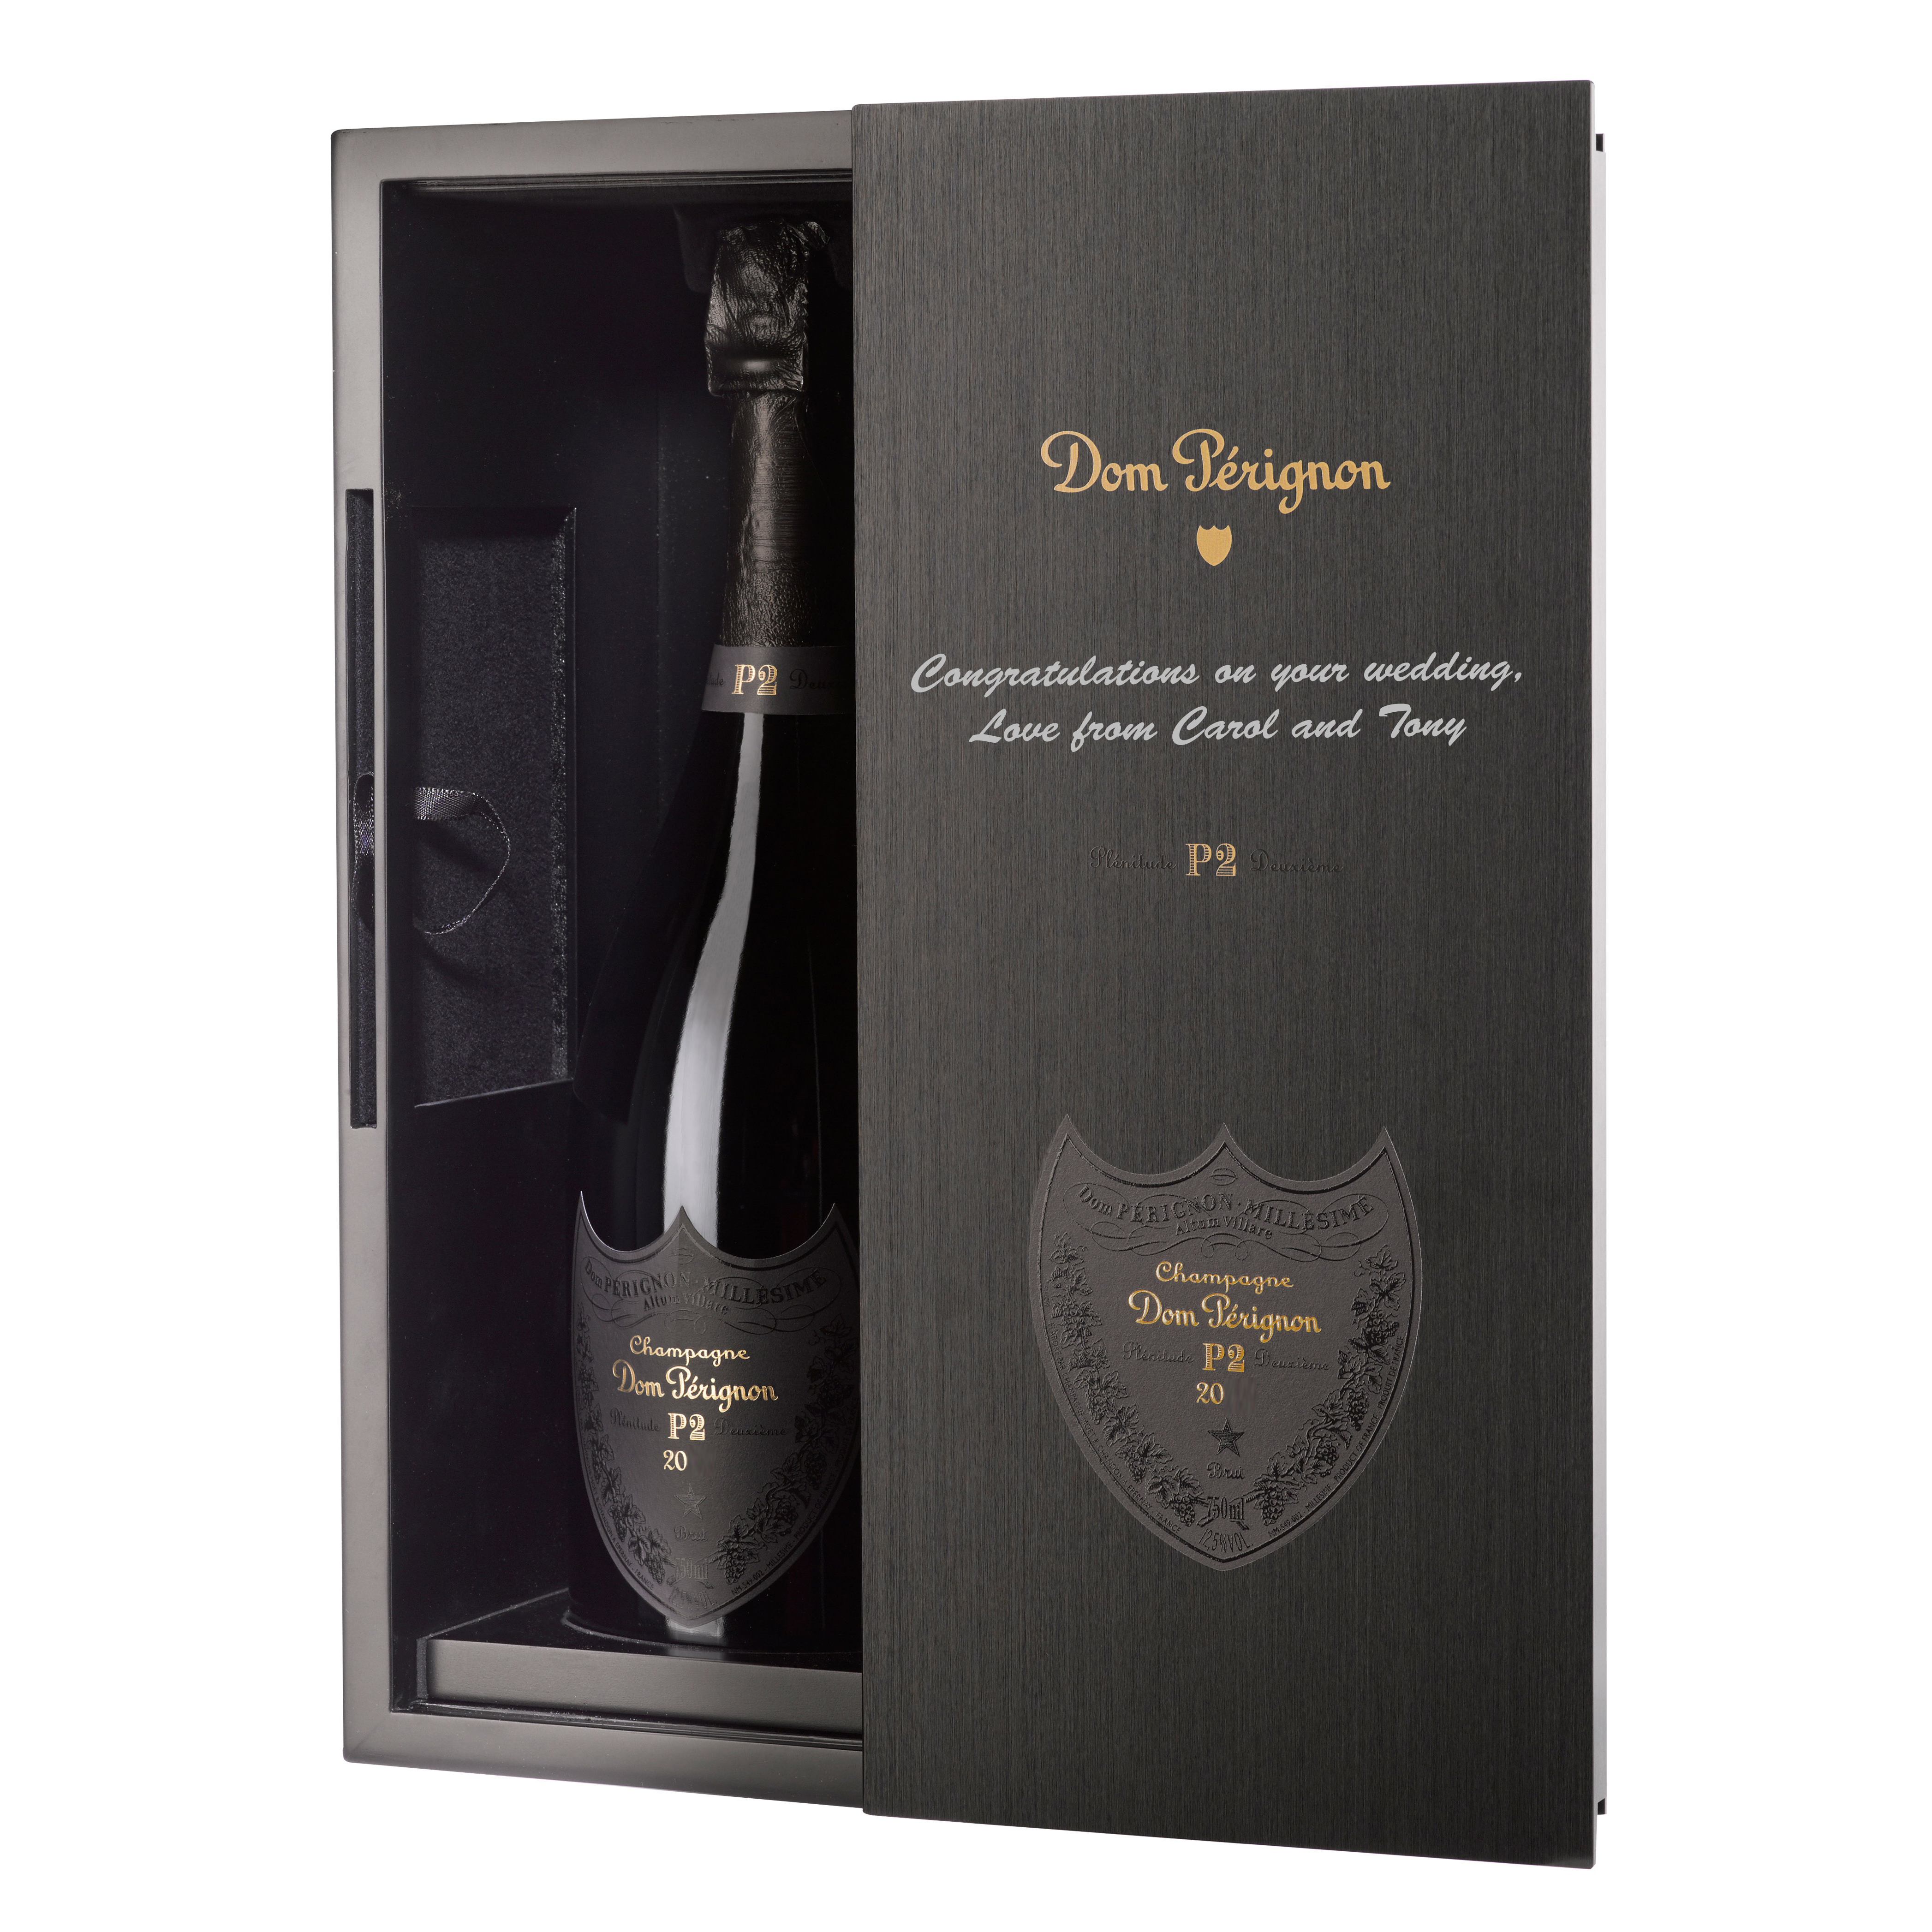 Dom Perignon 2000 Plenitude P2 Vintage Champagne 75cl, With Personalised Box